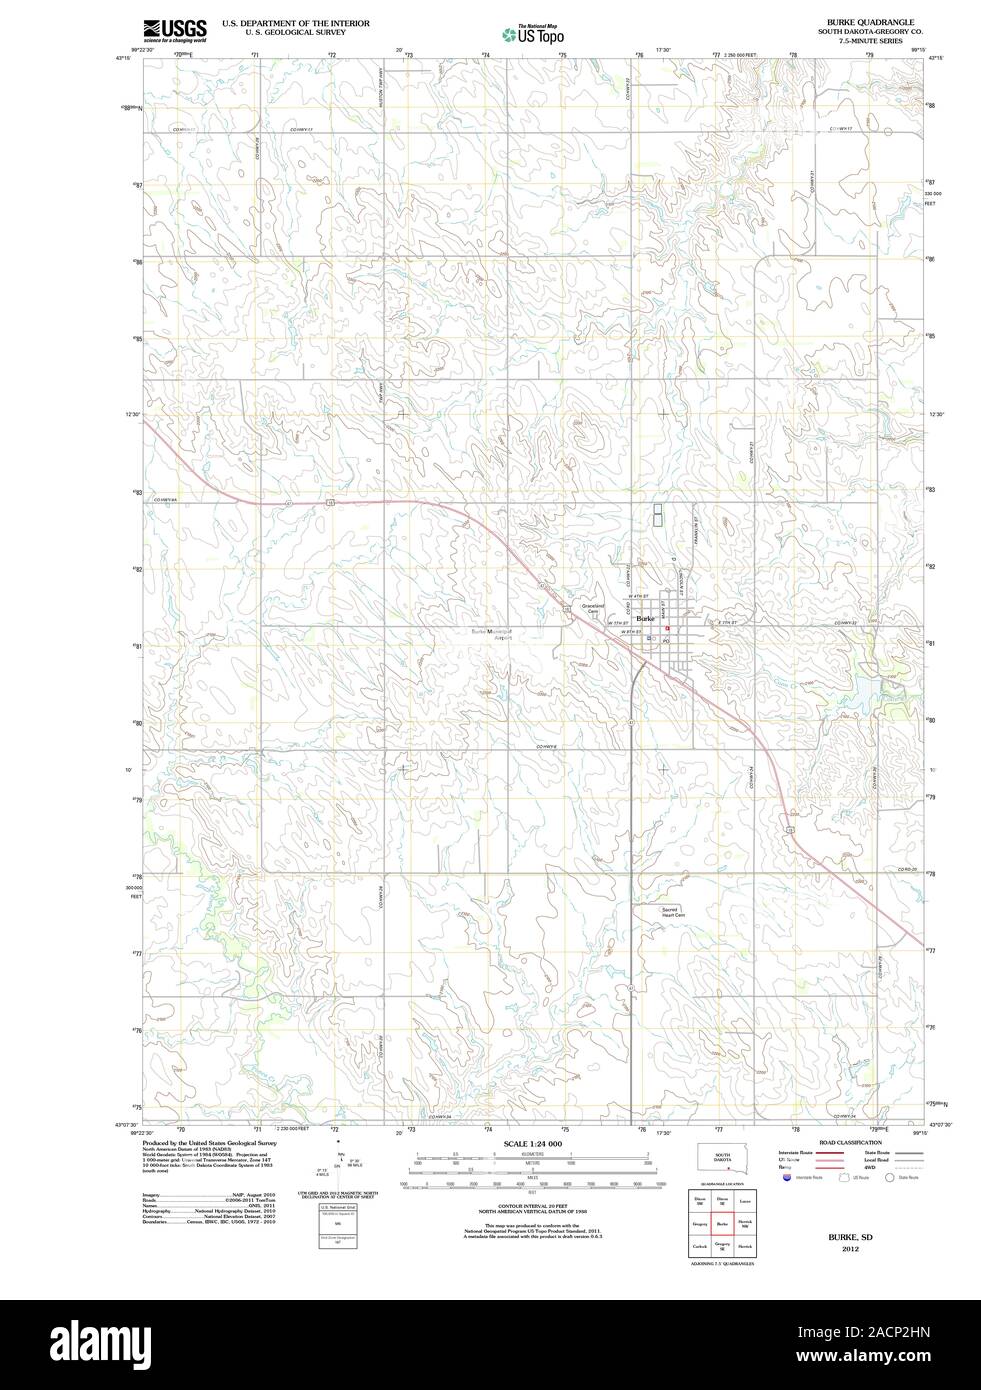 Burke south dakota map hi-res stock photography and images - Alamy